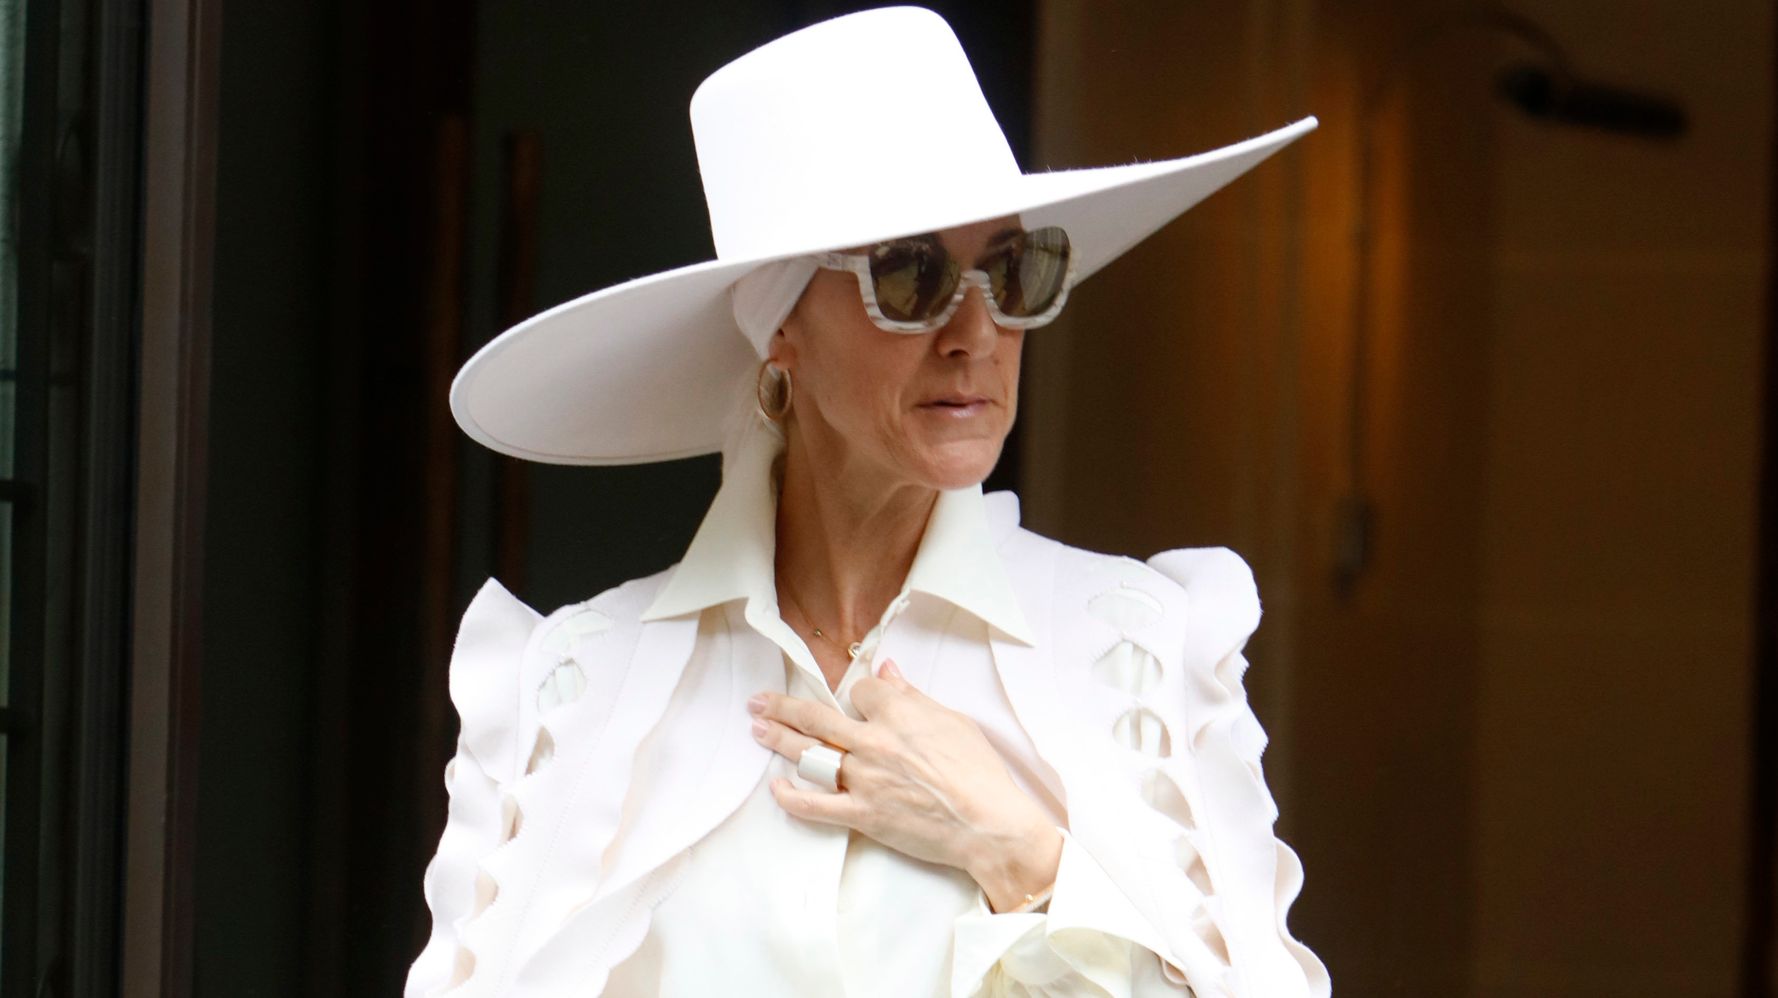 Louis Vuitton x Supreme Off White Pajama Shirt Seen On Celine Dion